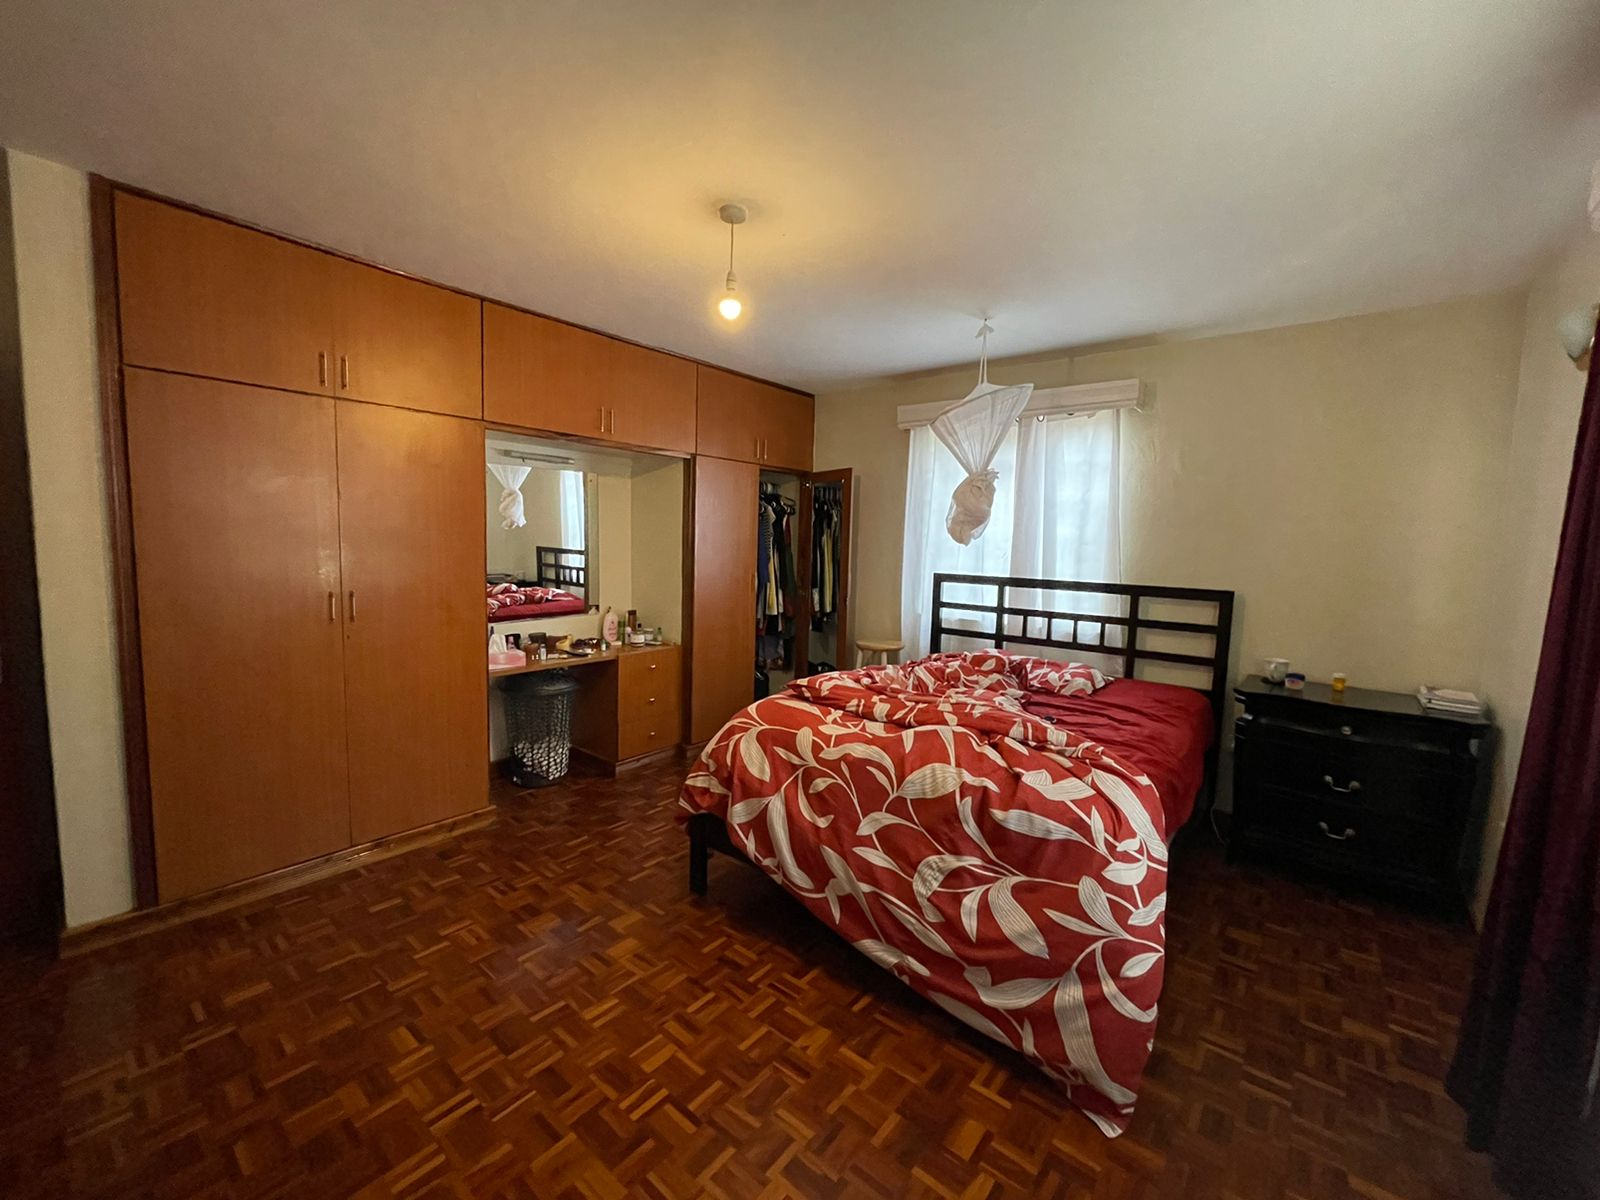 2 bedroom apartment all ensuite for Rent in Kileleshwa at Ksh70kmont (12)